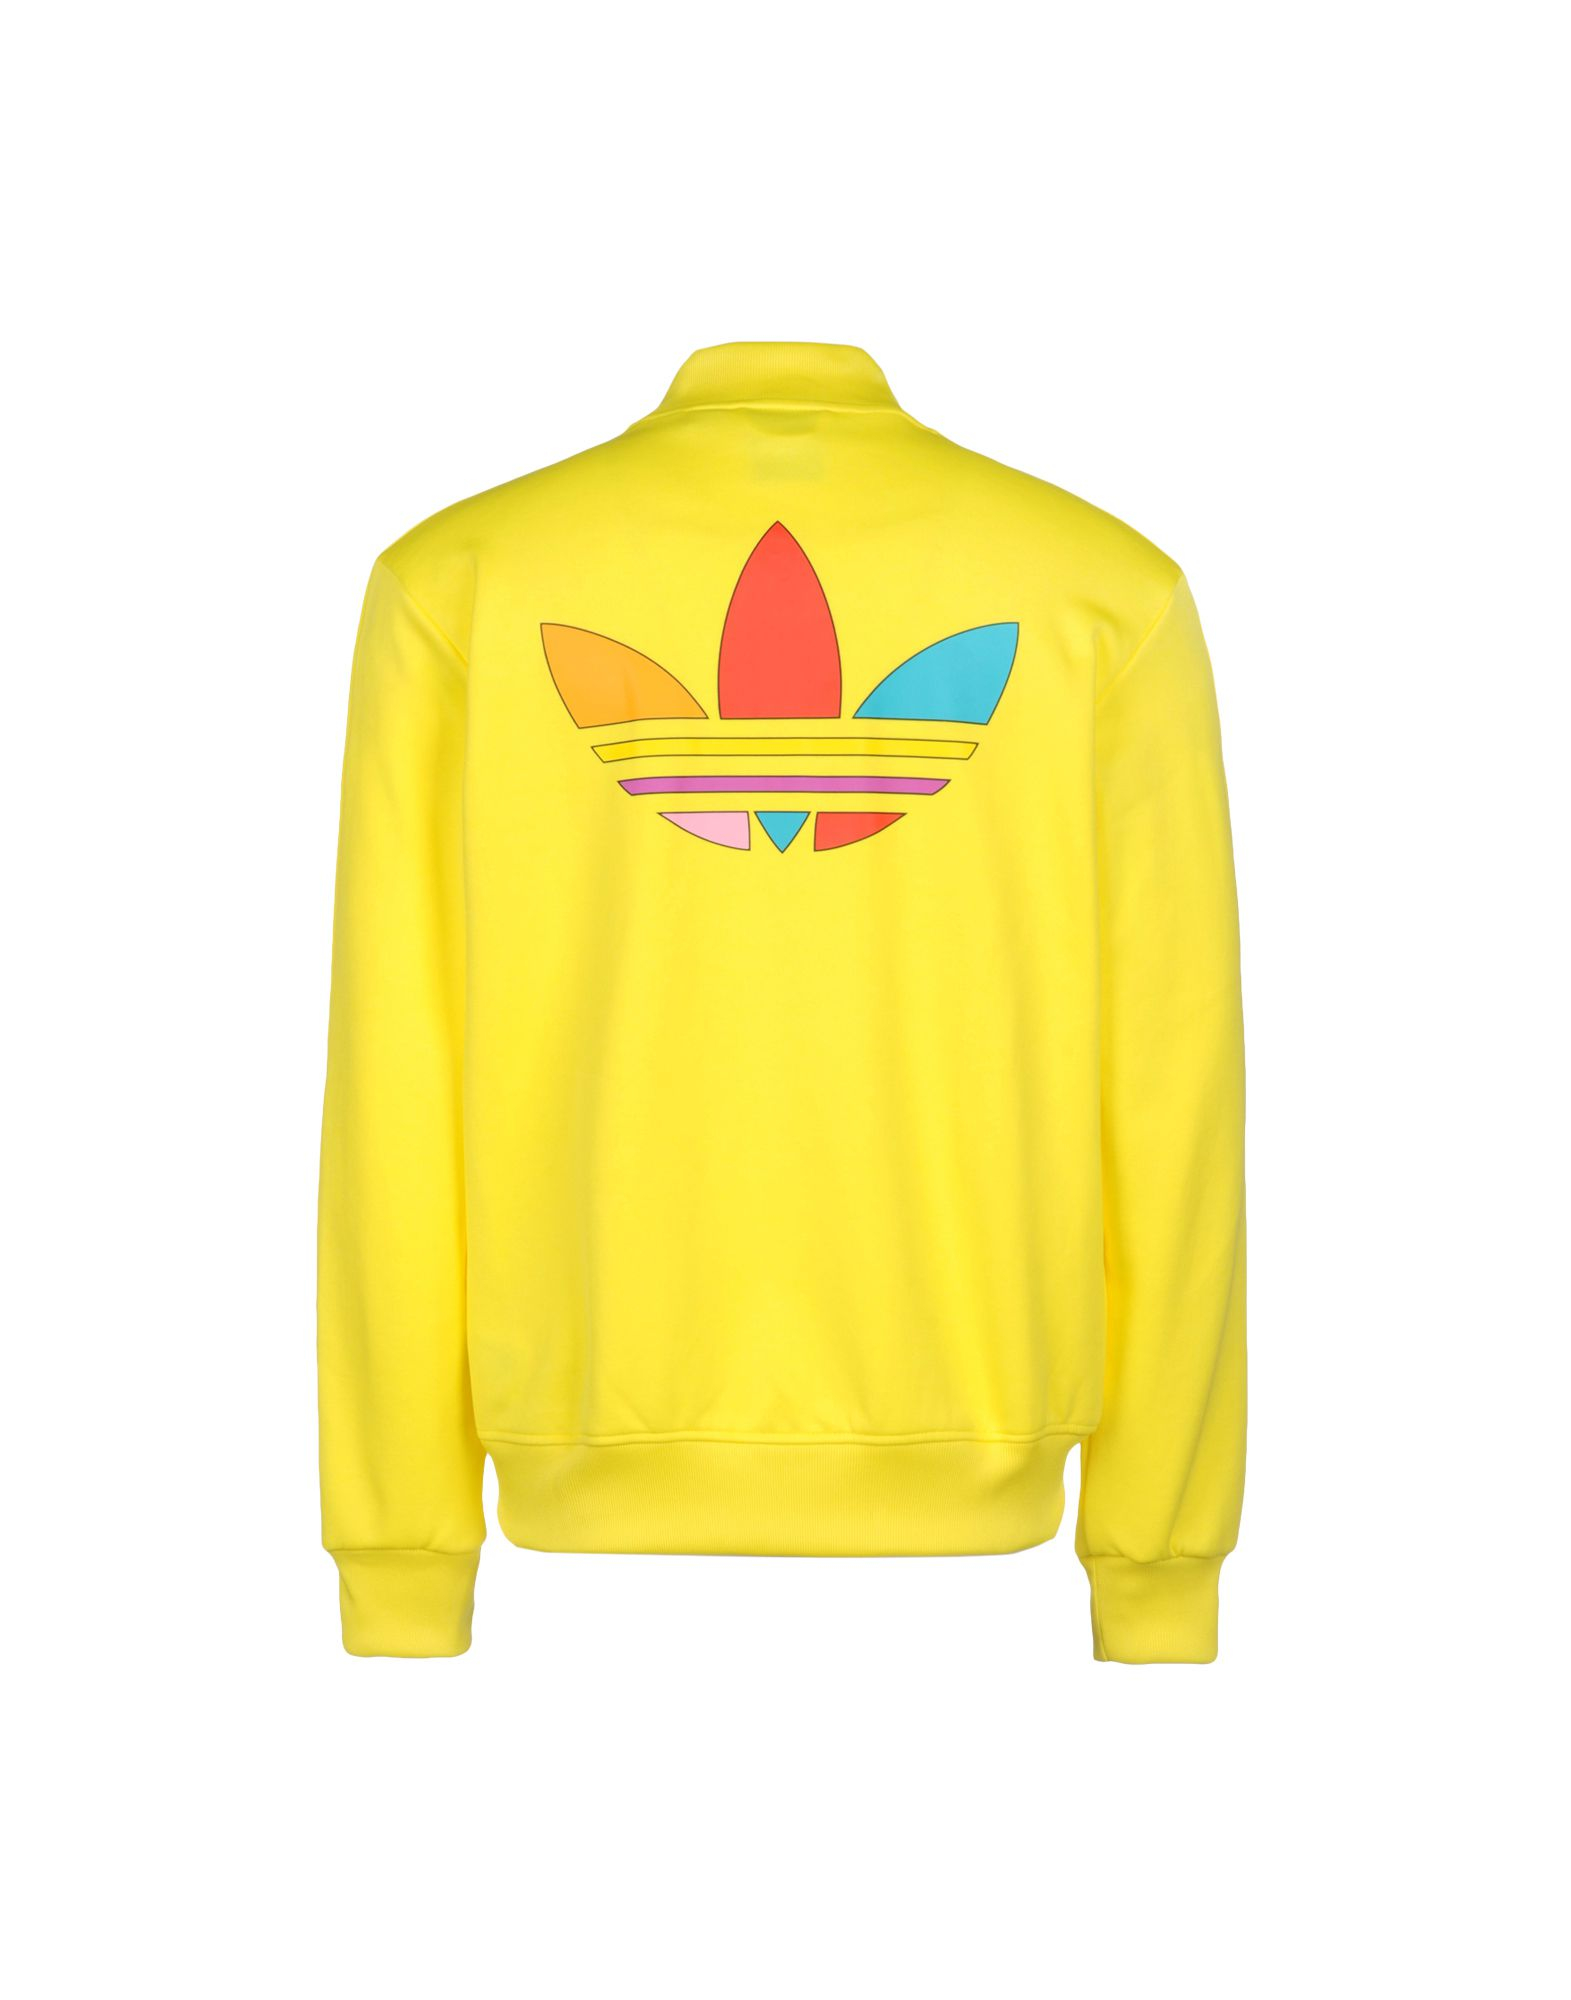 Adidas by pharrell williams Sweatshirt in Yellow for Men | Lyst